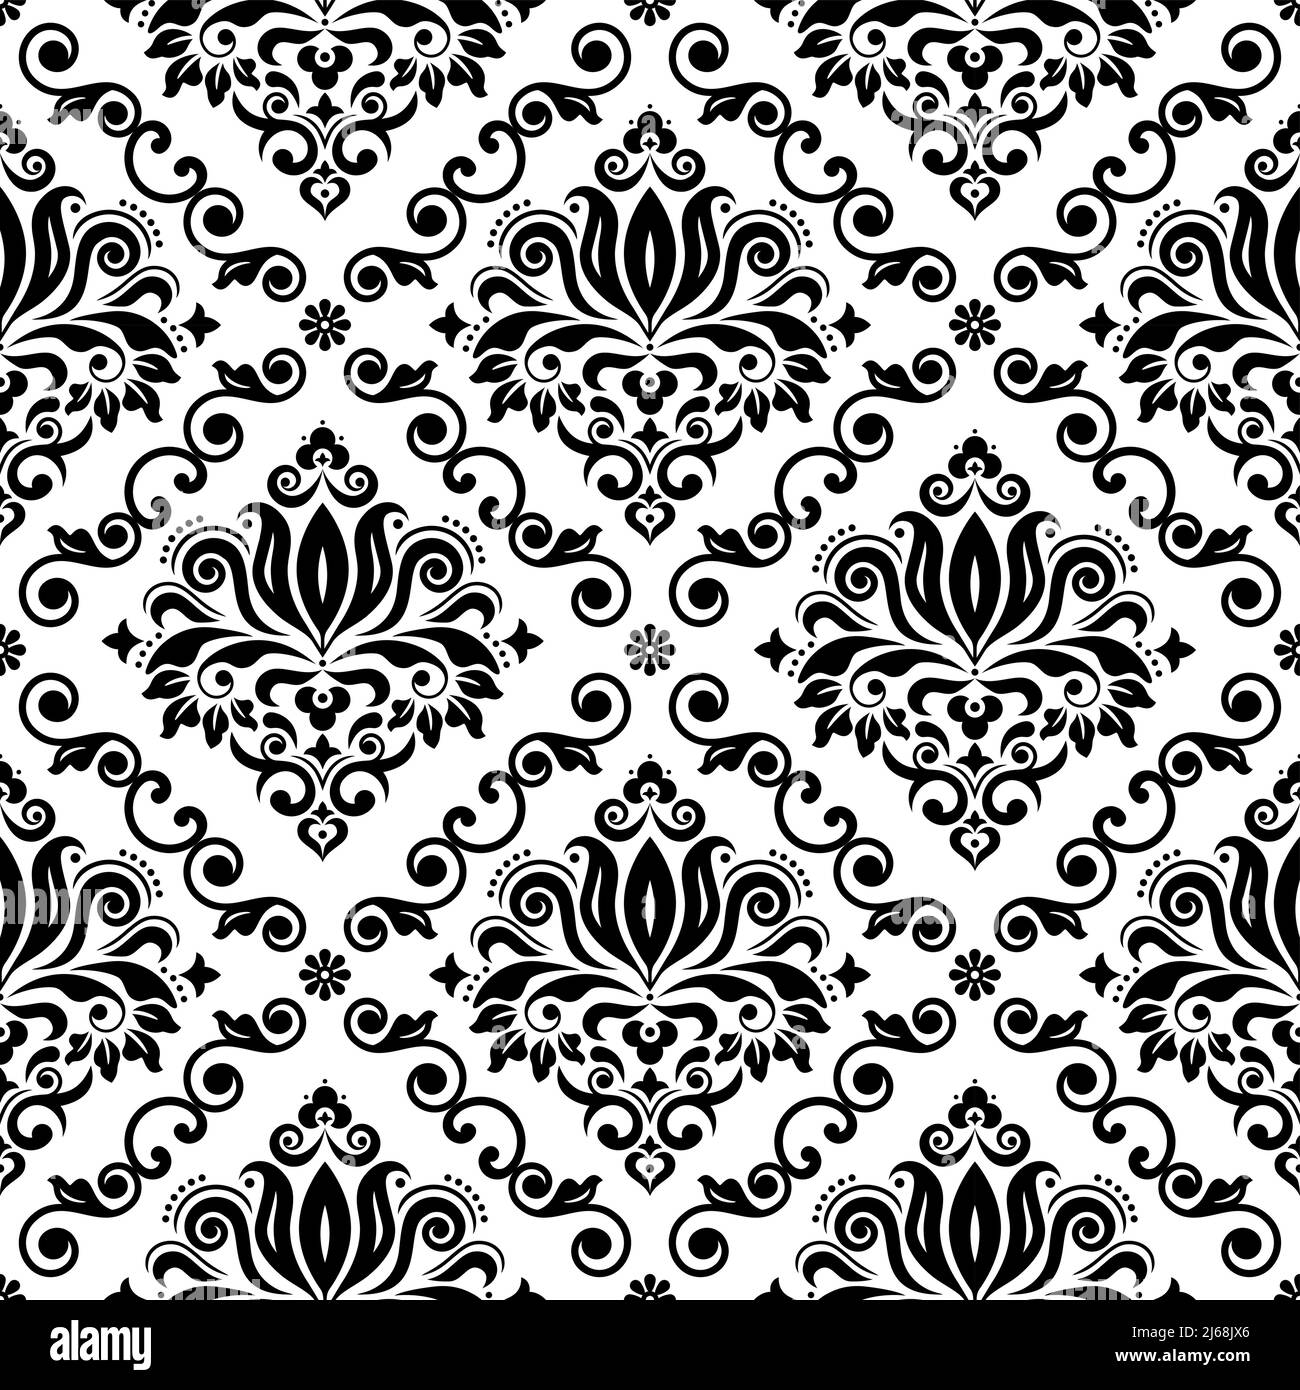 Classic Damask wallpaper or fabric print pattern, retro textile vector design, royal elegant decor is black on white background Stock Vector